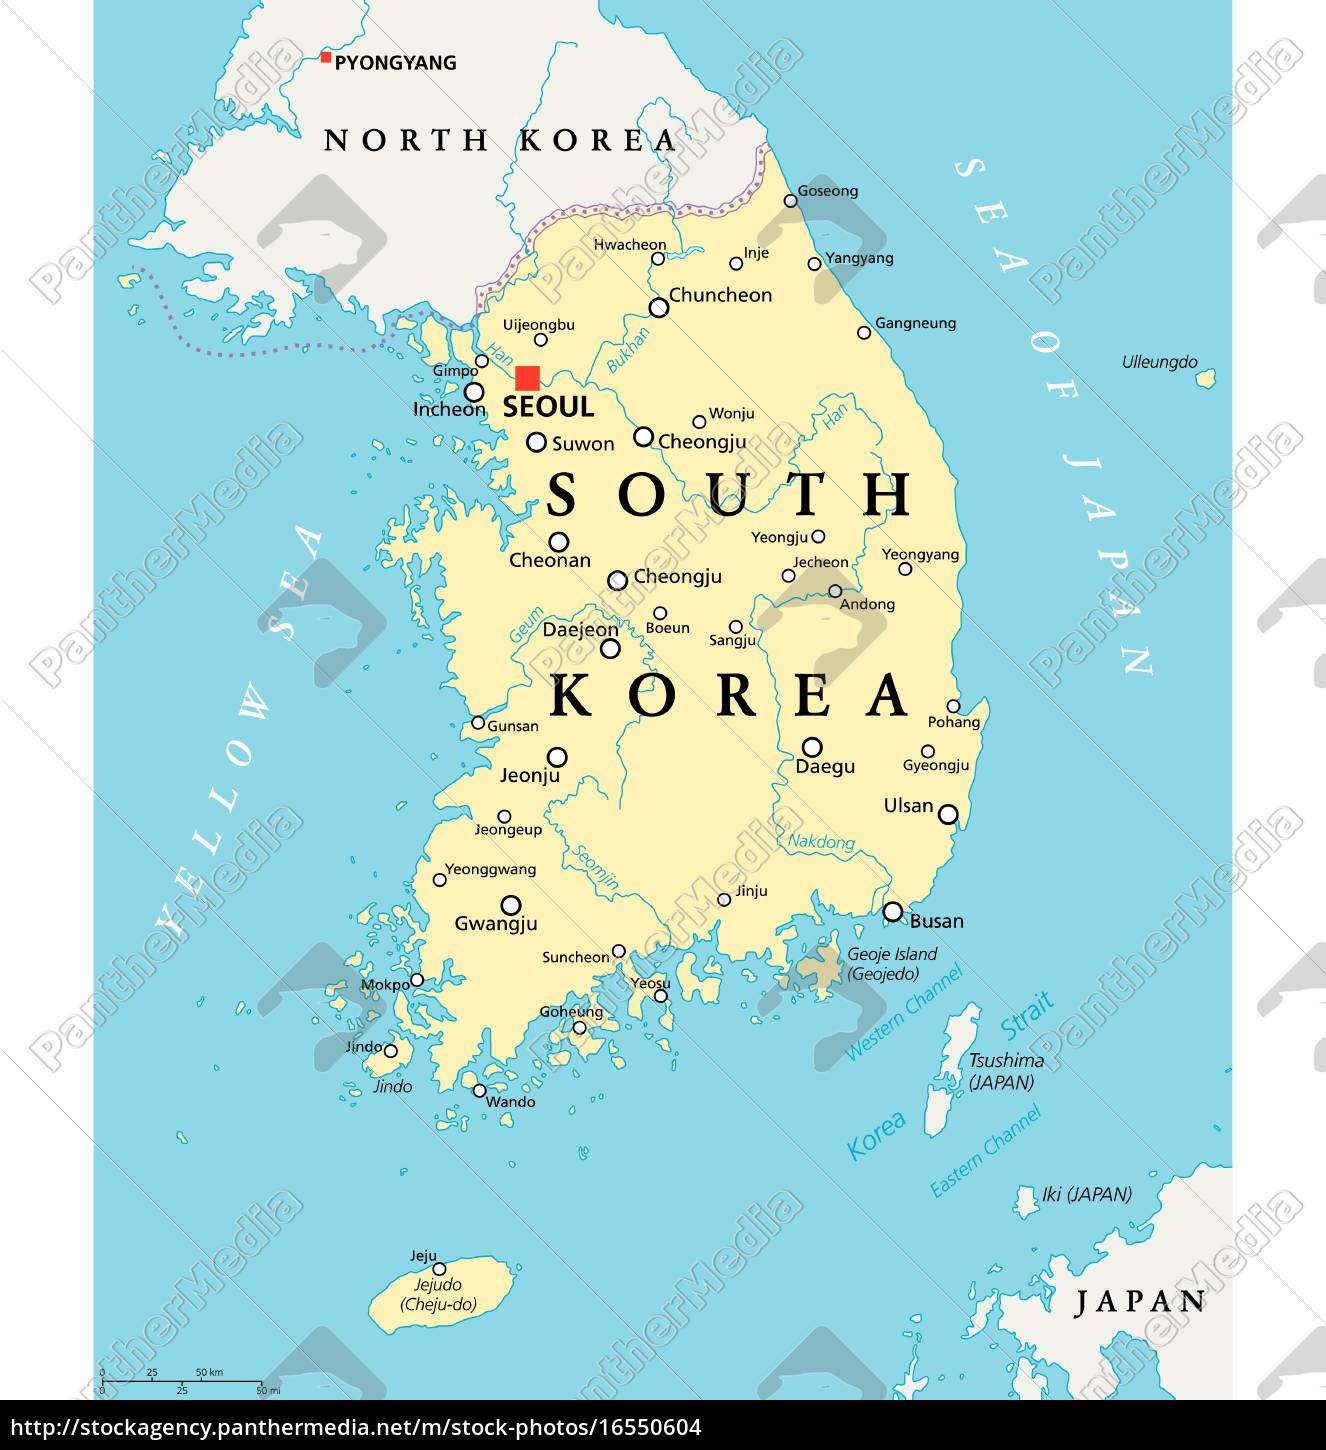 map of seoul south korea South Korea Political Map Royalty Free Photo 16550604 map of seoul south korea